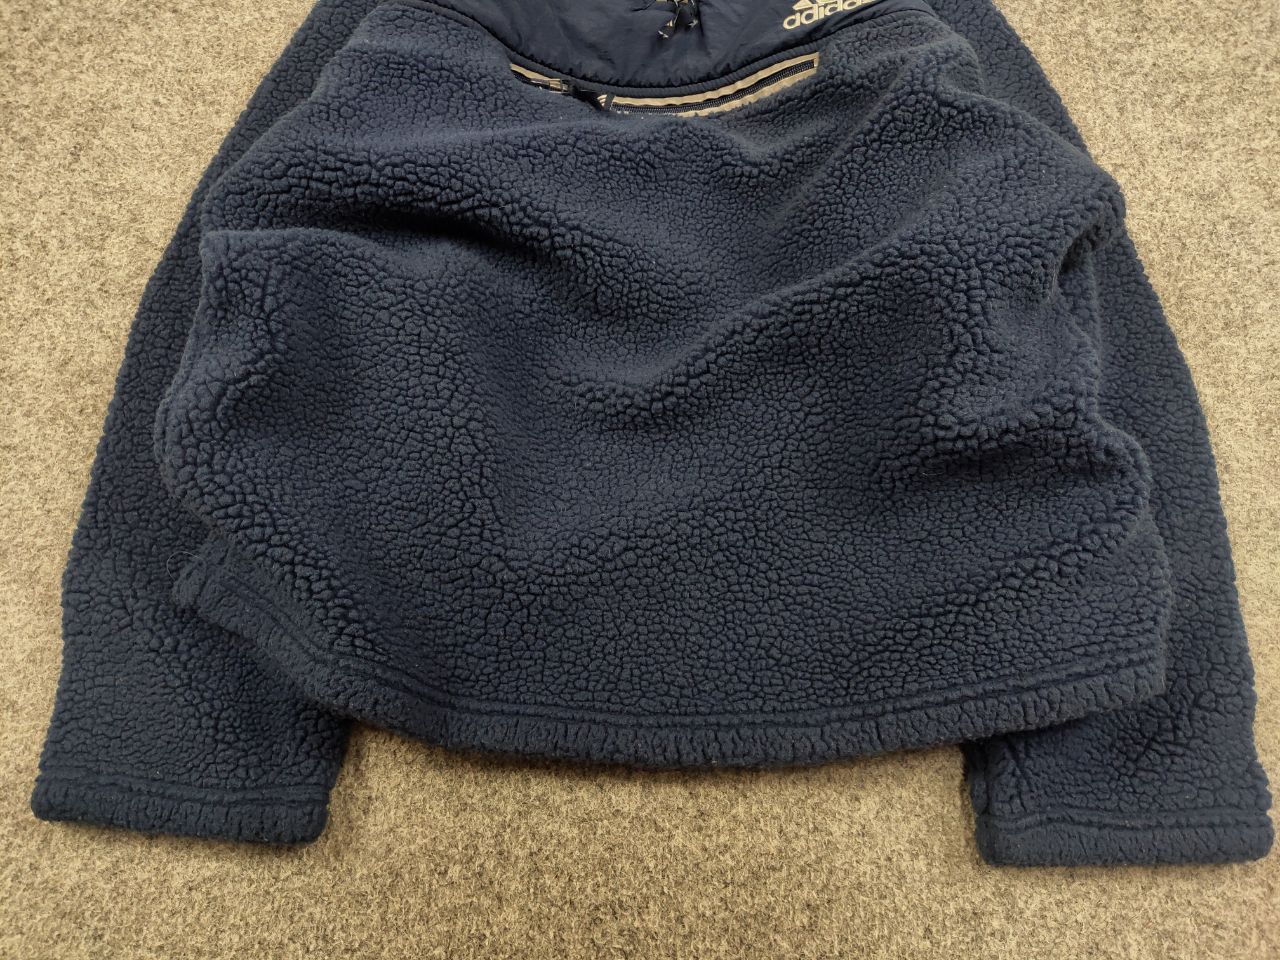 Adidas Vintage 90's Adidas Teddy Fleece Dark Zip Pullover Jacket Size US M / EU 48-50 / 2 - 4 Thumbnail